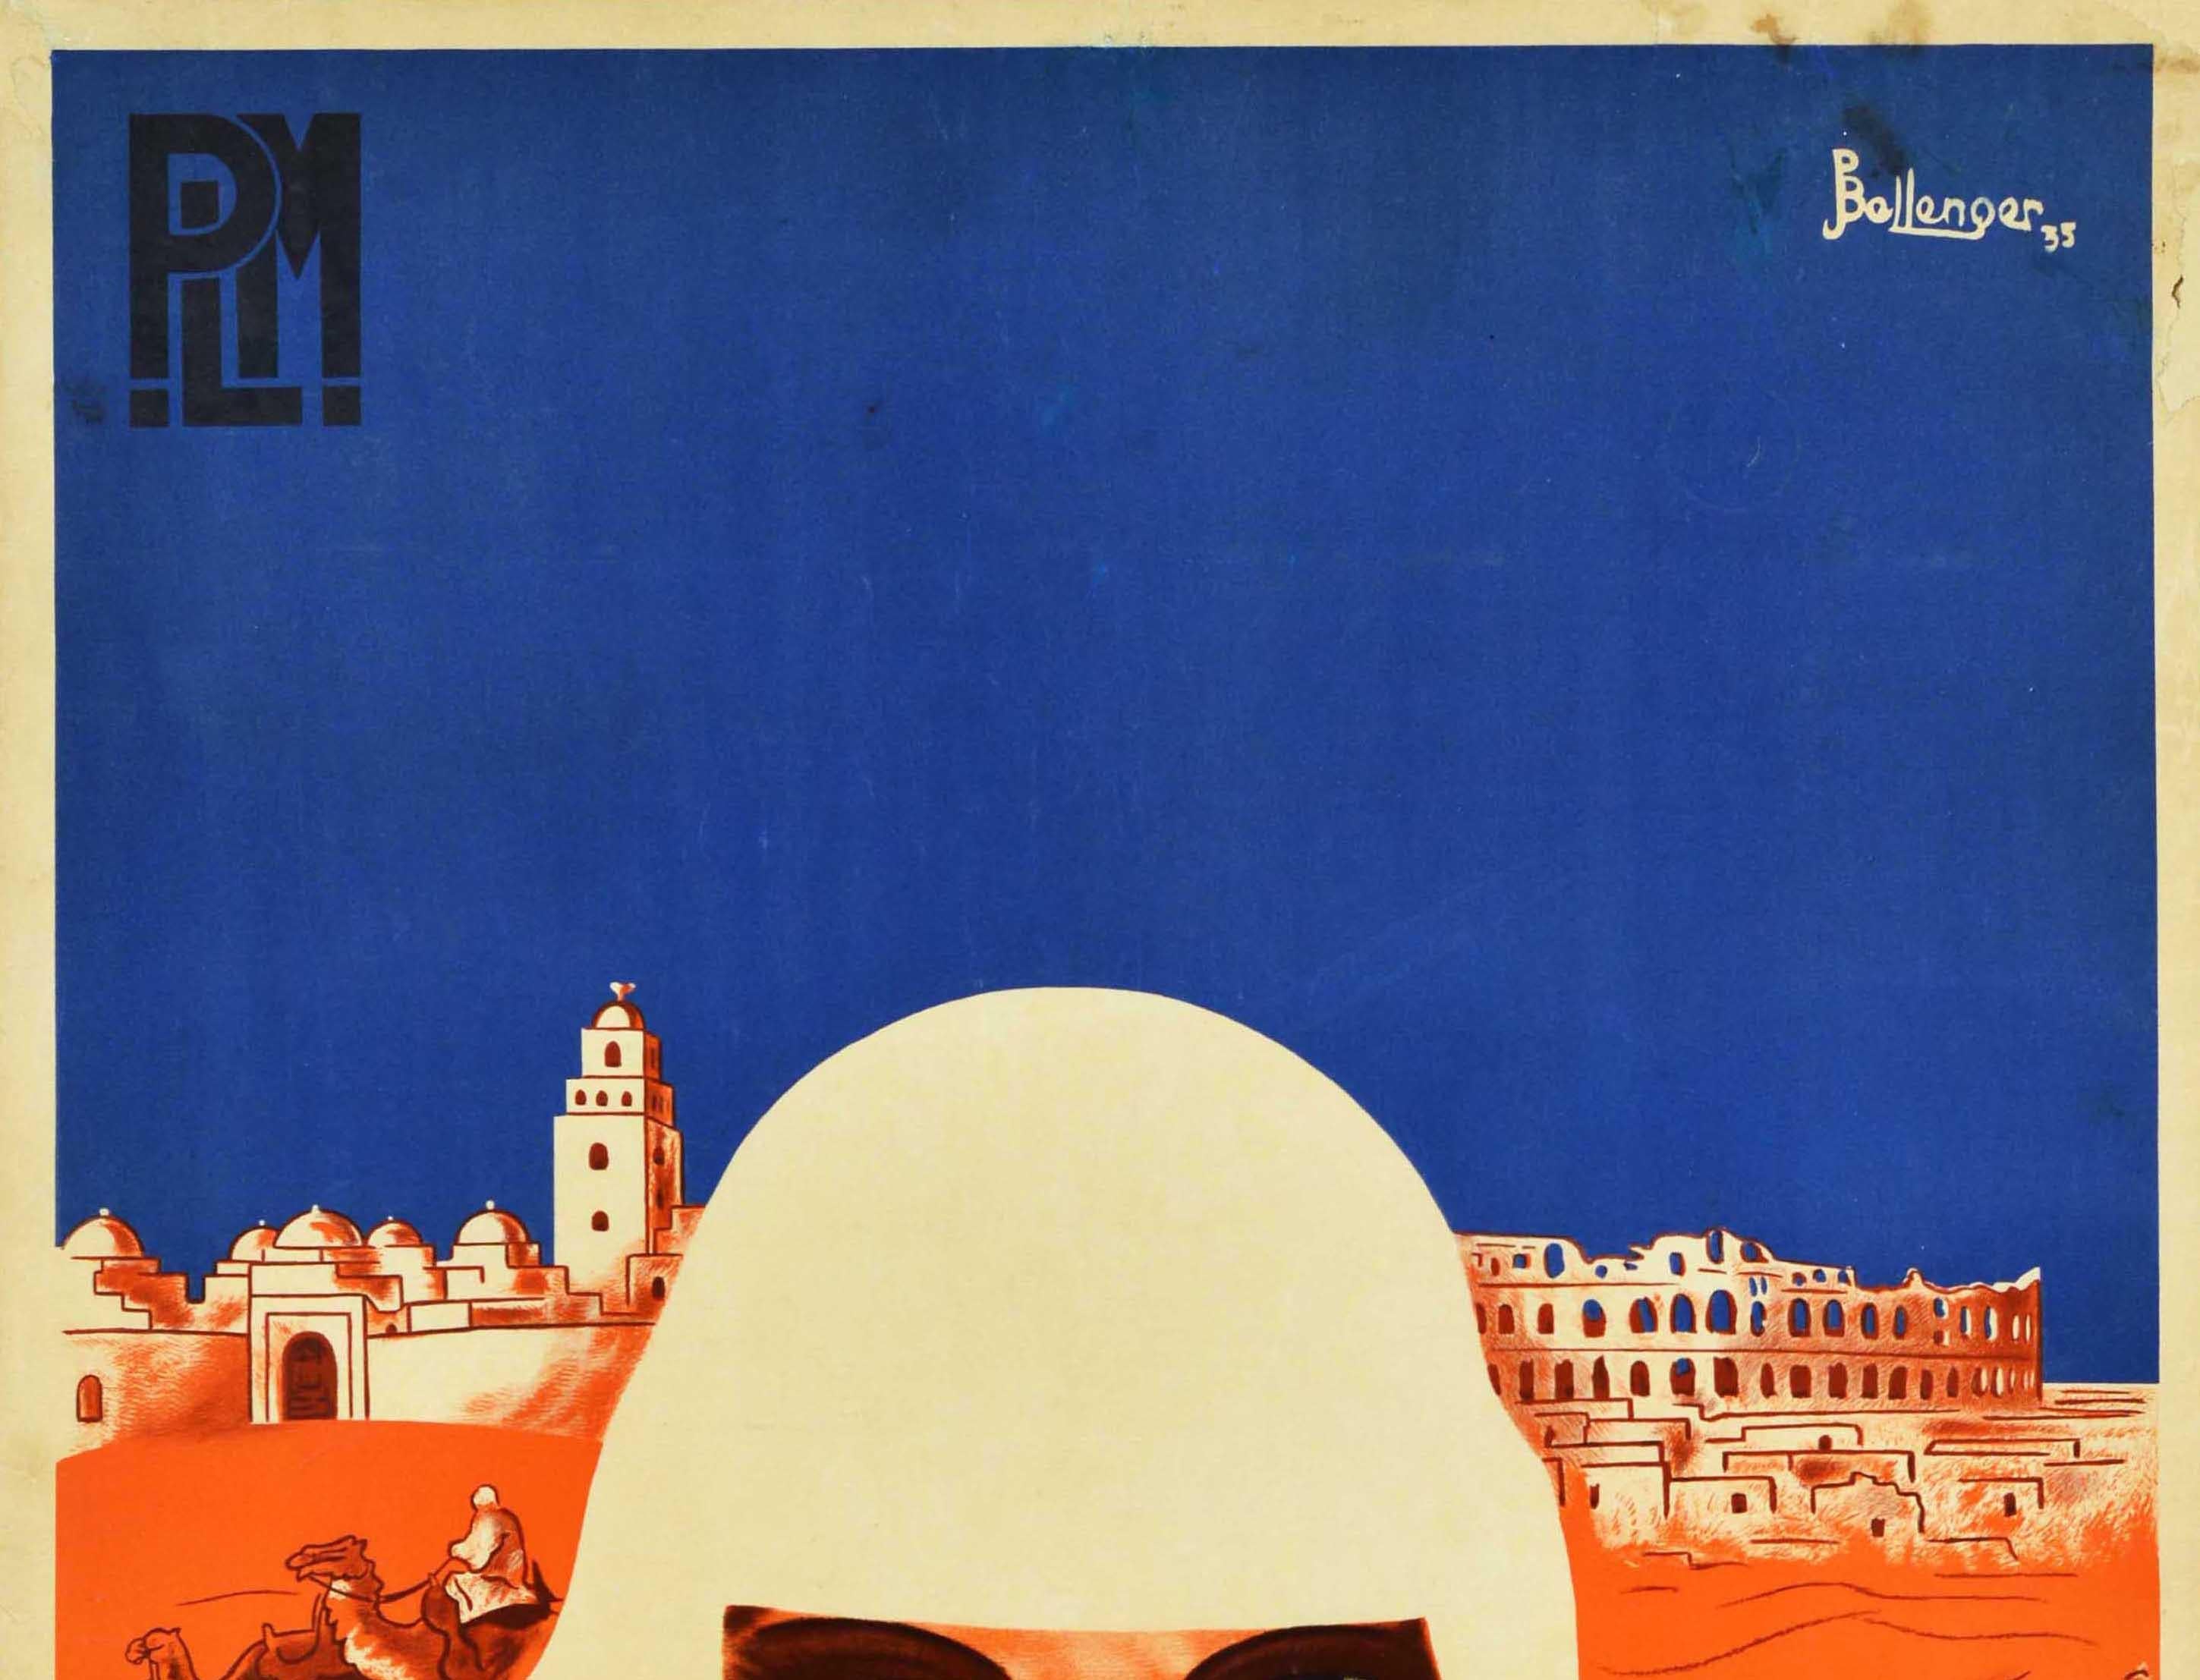 French Original Vintage PLM Railway Travel Poster Tunisie Tunisia Africa Art Deco